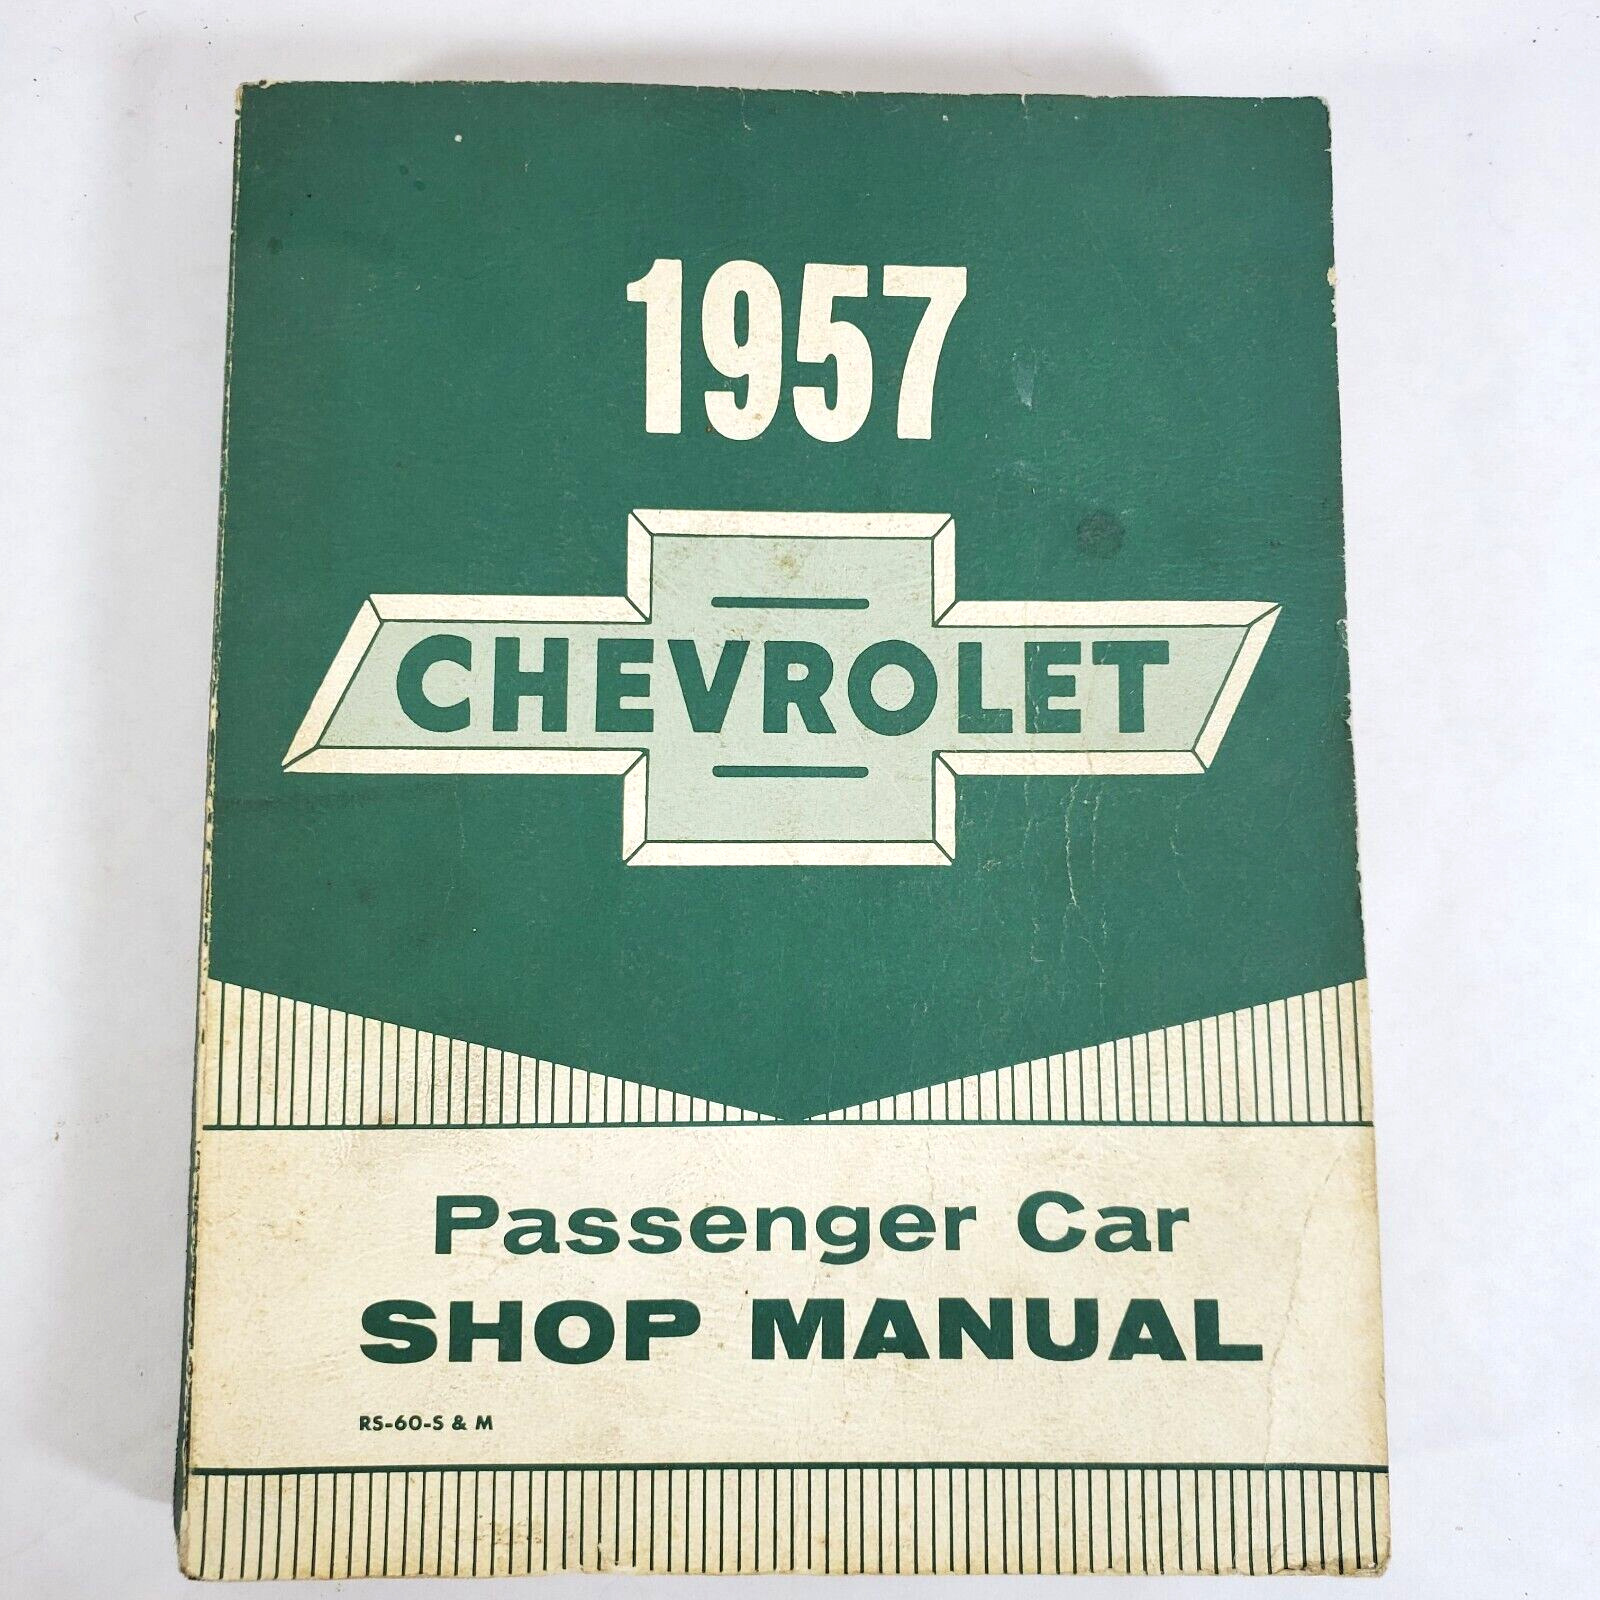 1957 Chevrolet Passenger Car Shop Manual 